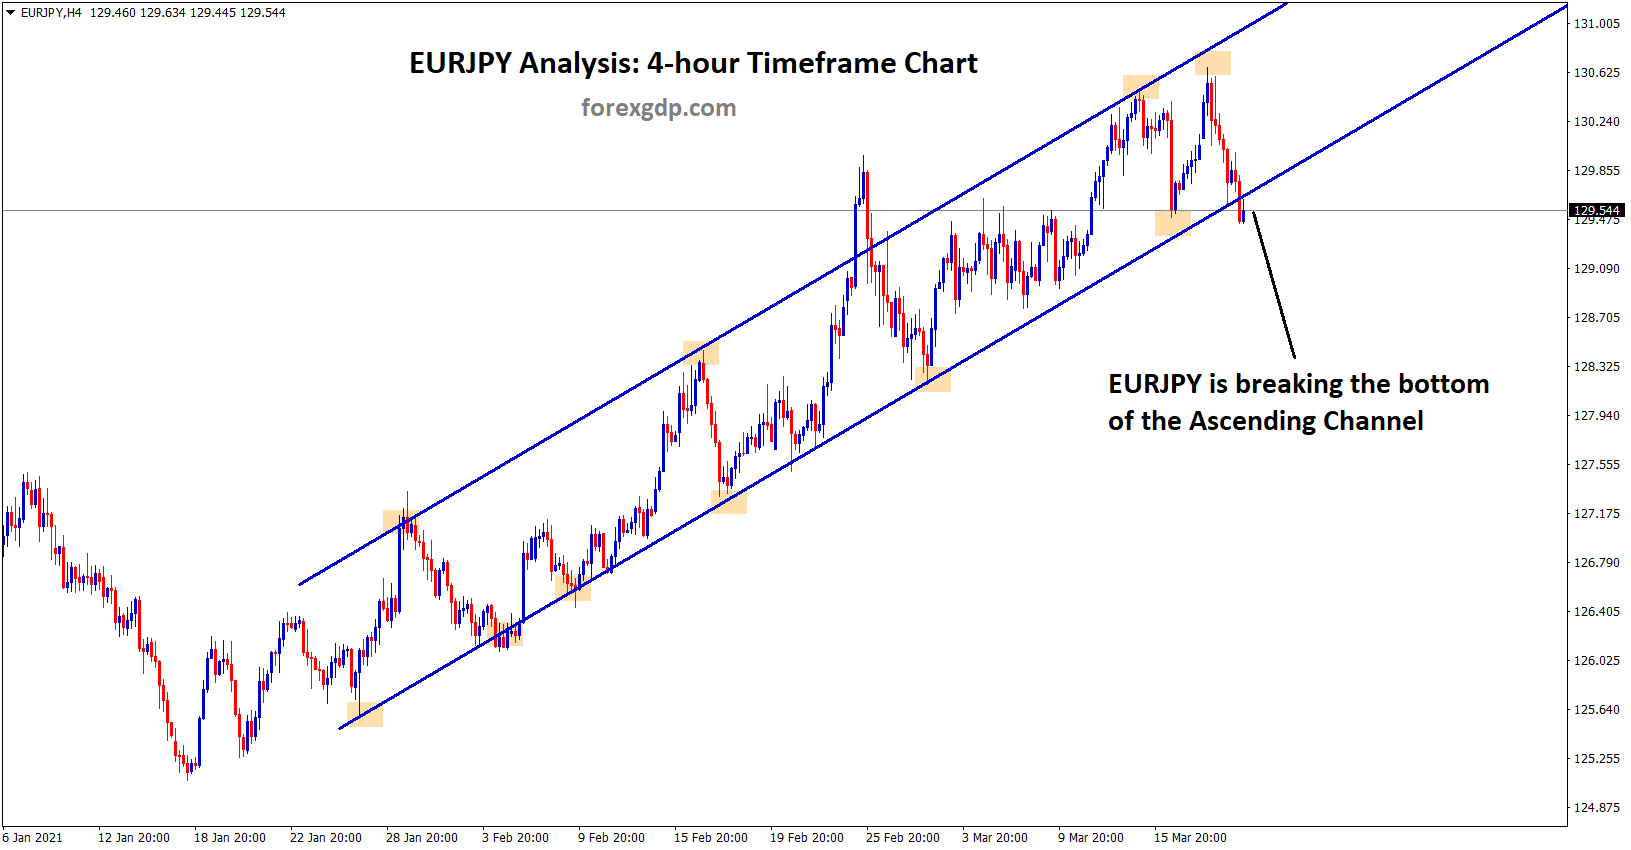 eurjpy is breaking the ascending channel bottom